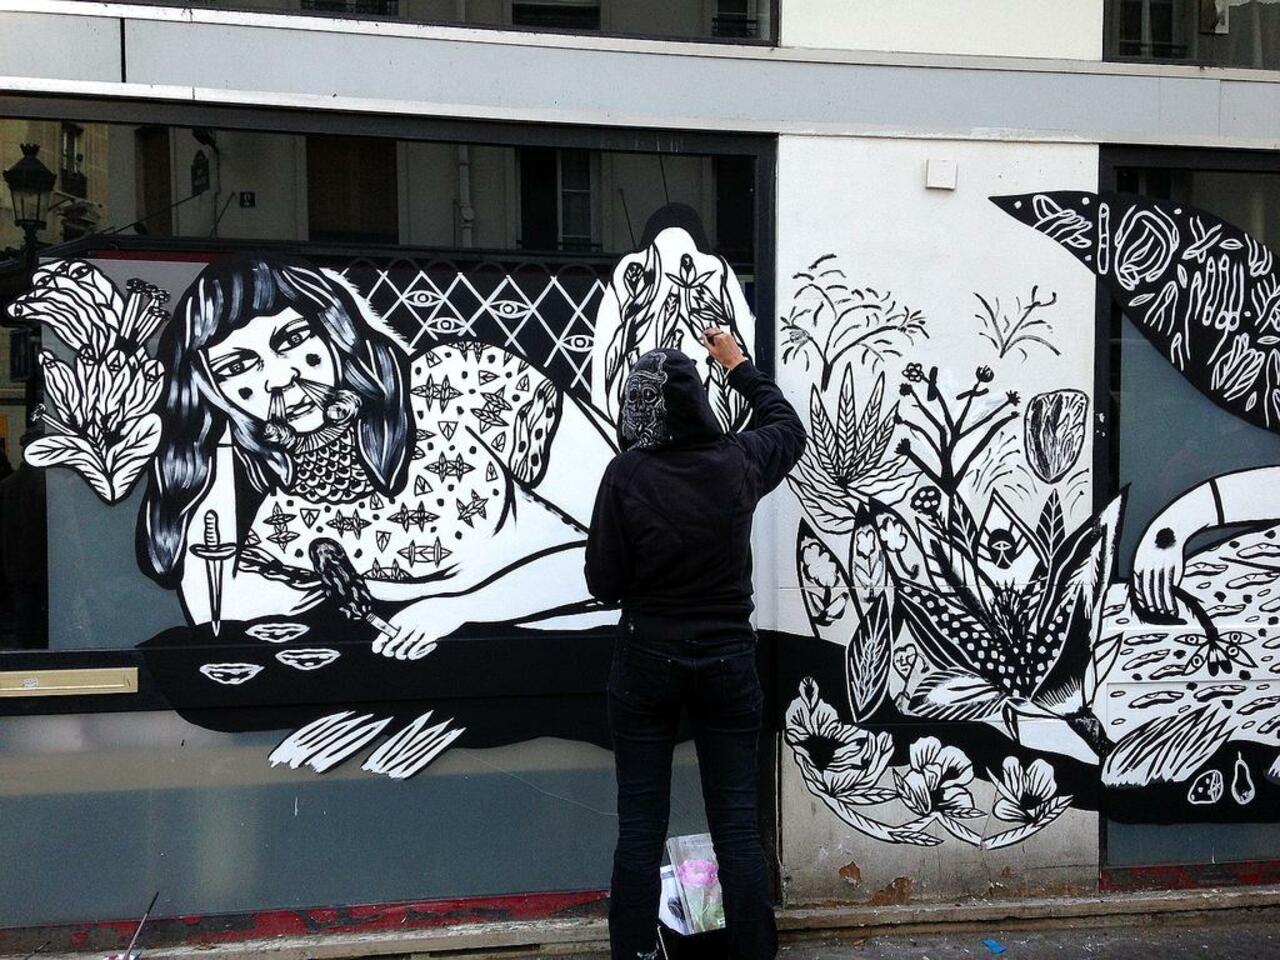 Street Art by Katjastroph in #Paris http://www.urbacolors.com #art #mural #graffiti #streetart http://t.co/P6SzwZt5sq